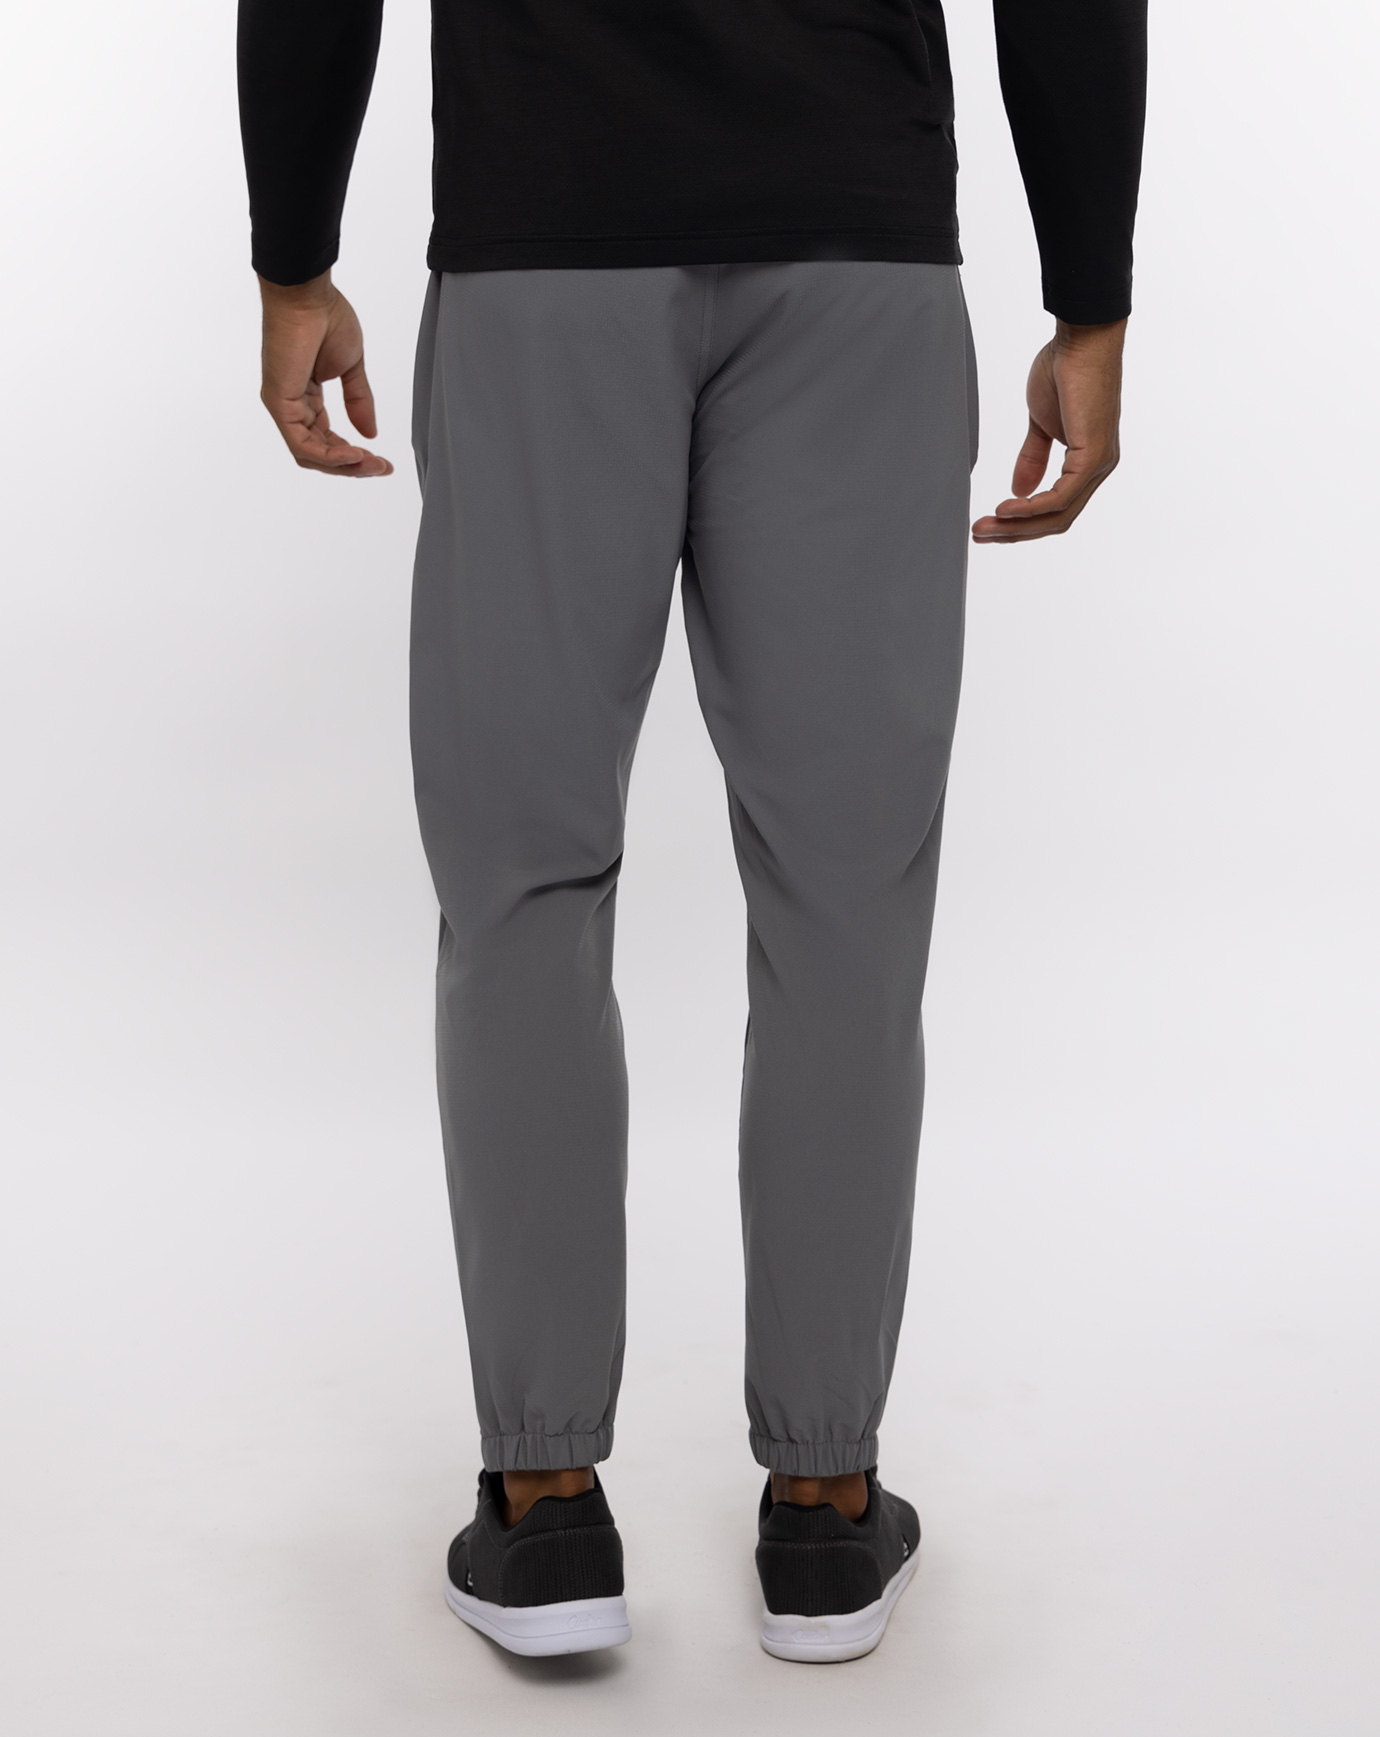 Real Essentials Black Sweatpants Mens Size Medium - beyond exchange